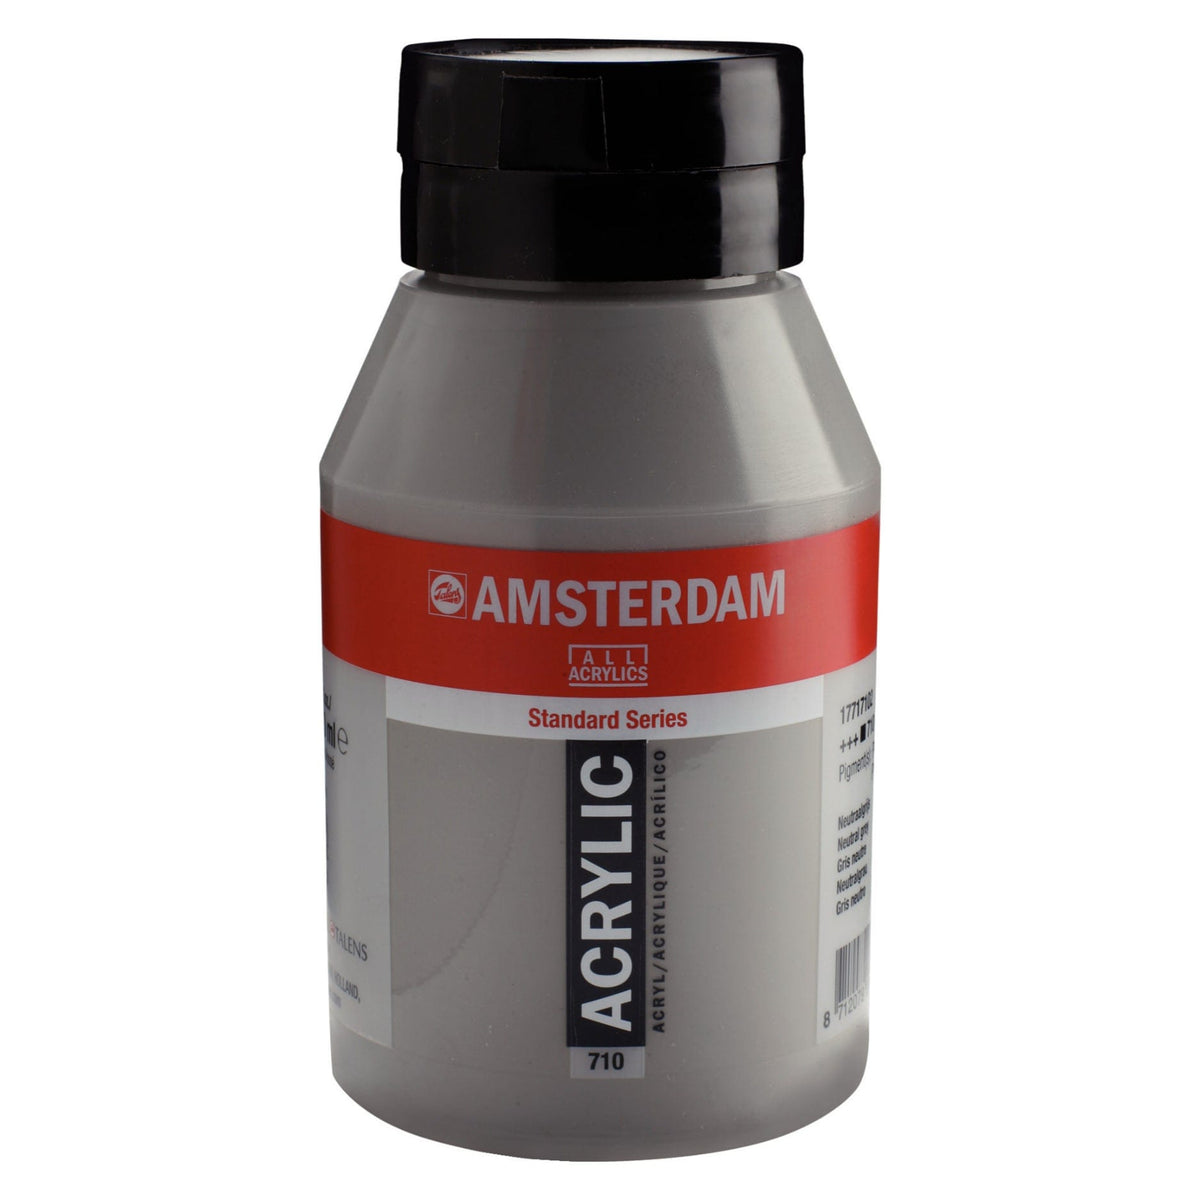 Standard Series Acrylic Jar 1000 ml